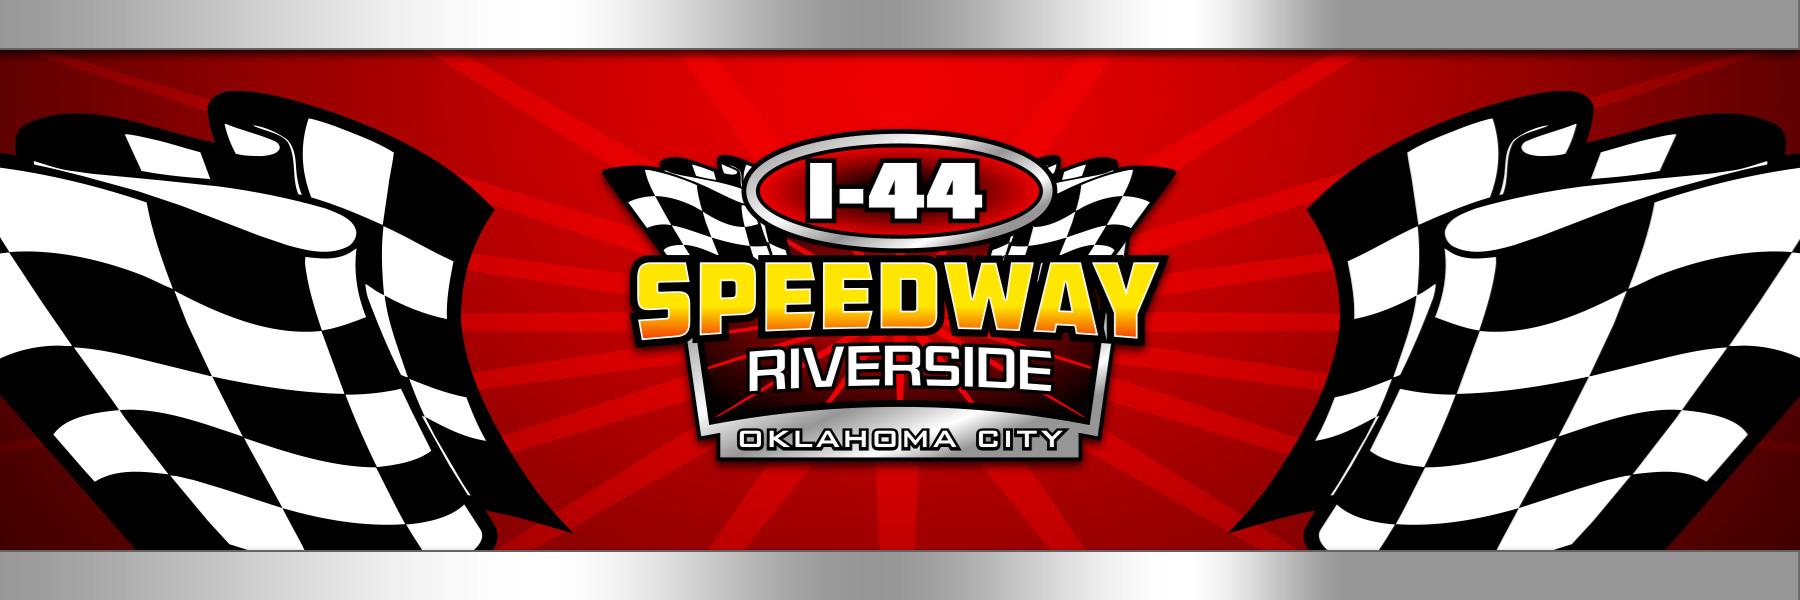 9/25/2021 - I-44 Riverside Speedway